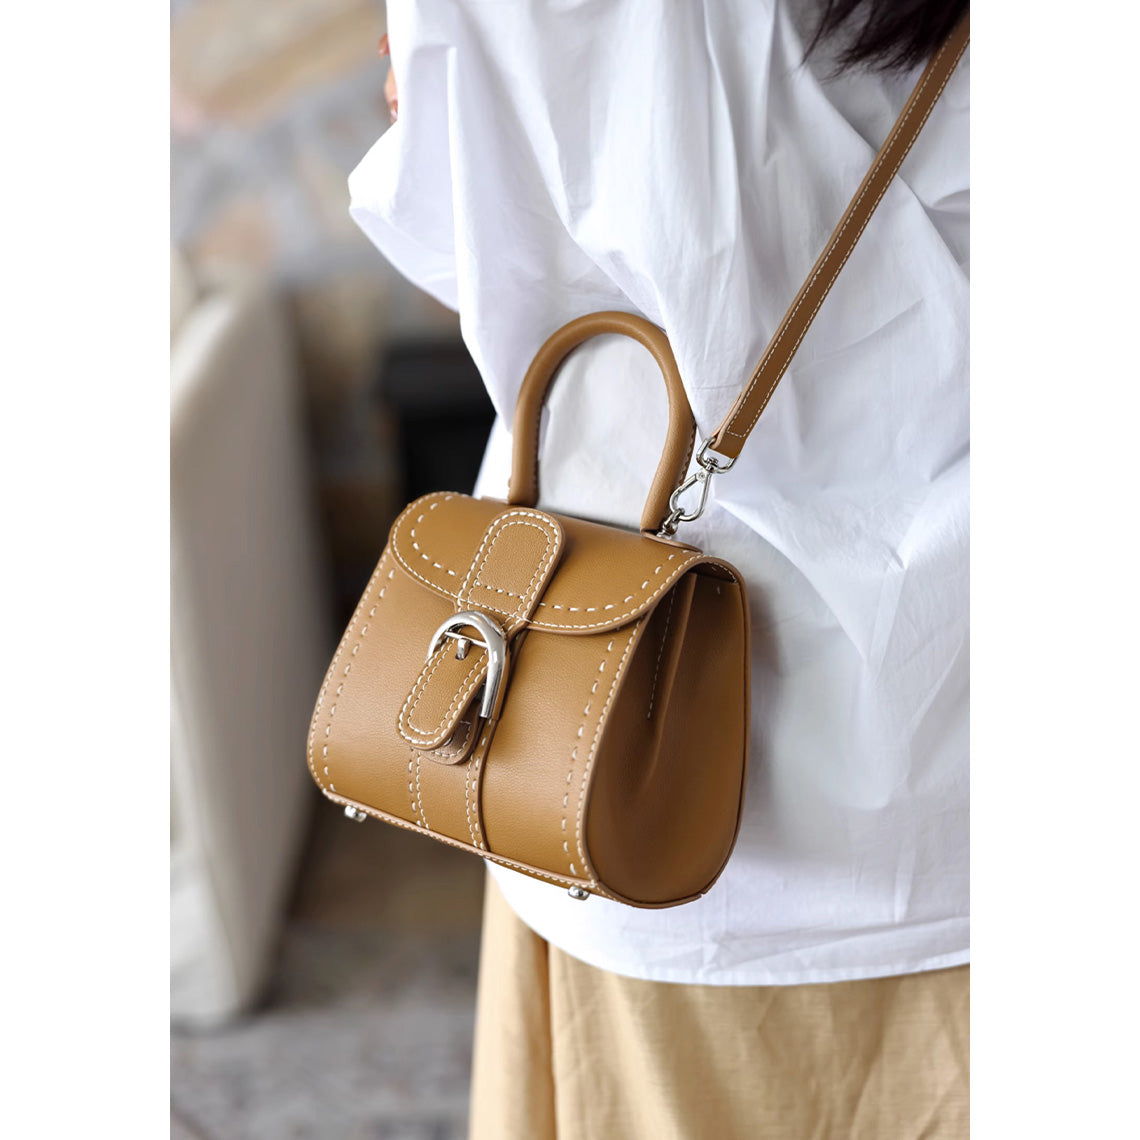 POPSEWING® Leather Inspired Delvaux Saddle Bag DIY Kits